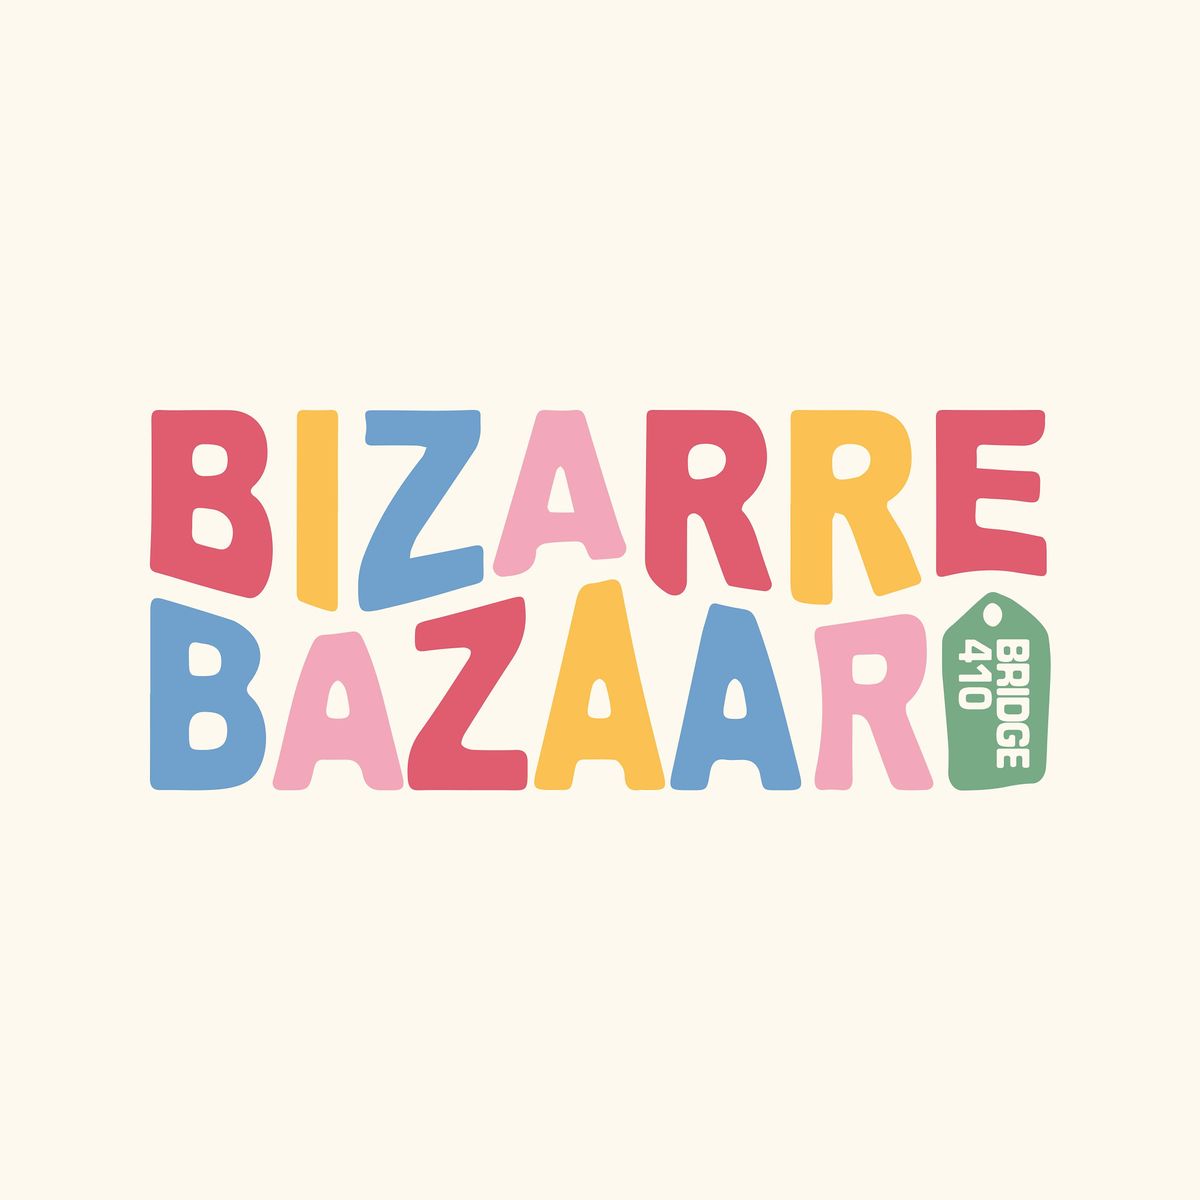 Bizarre Bazaar! at Bridge 410